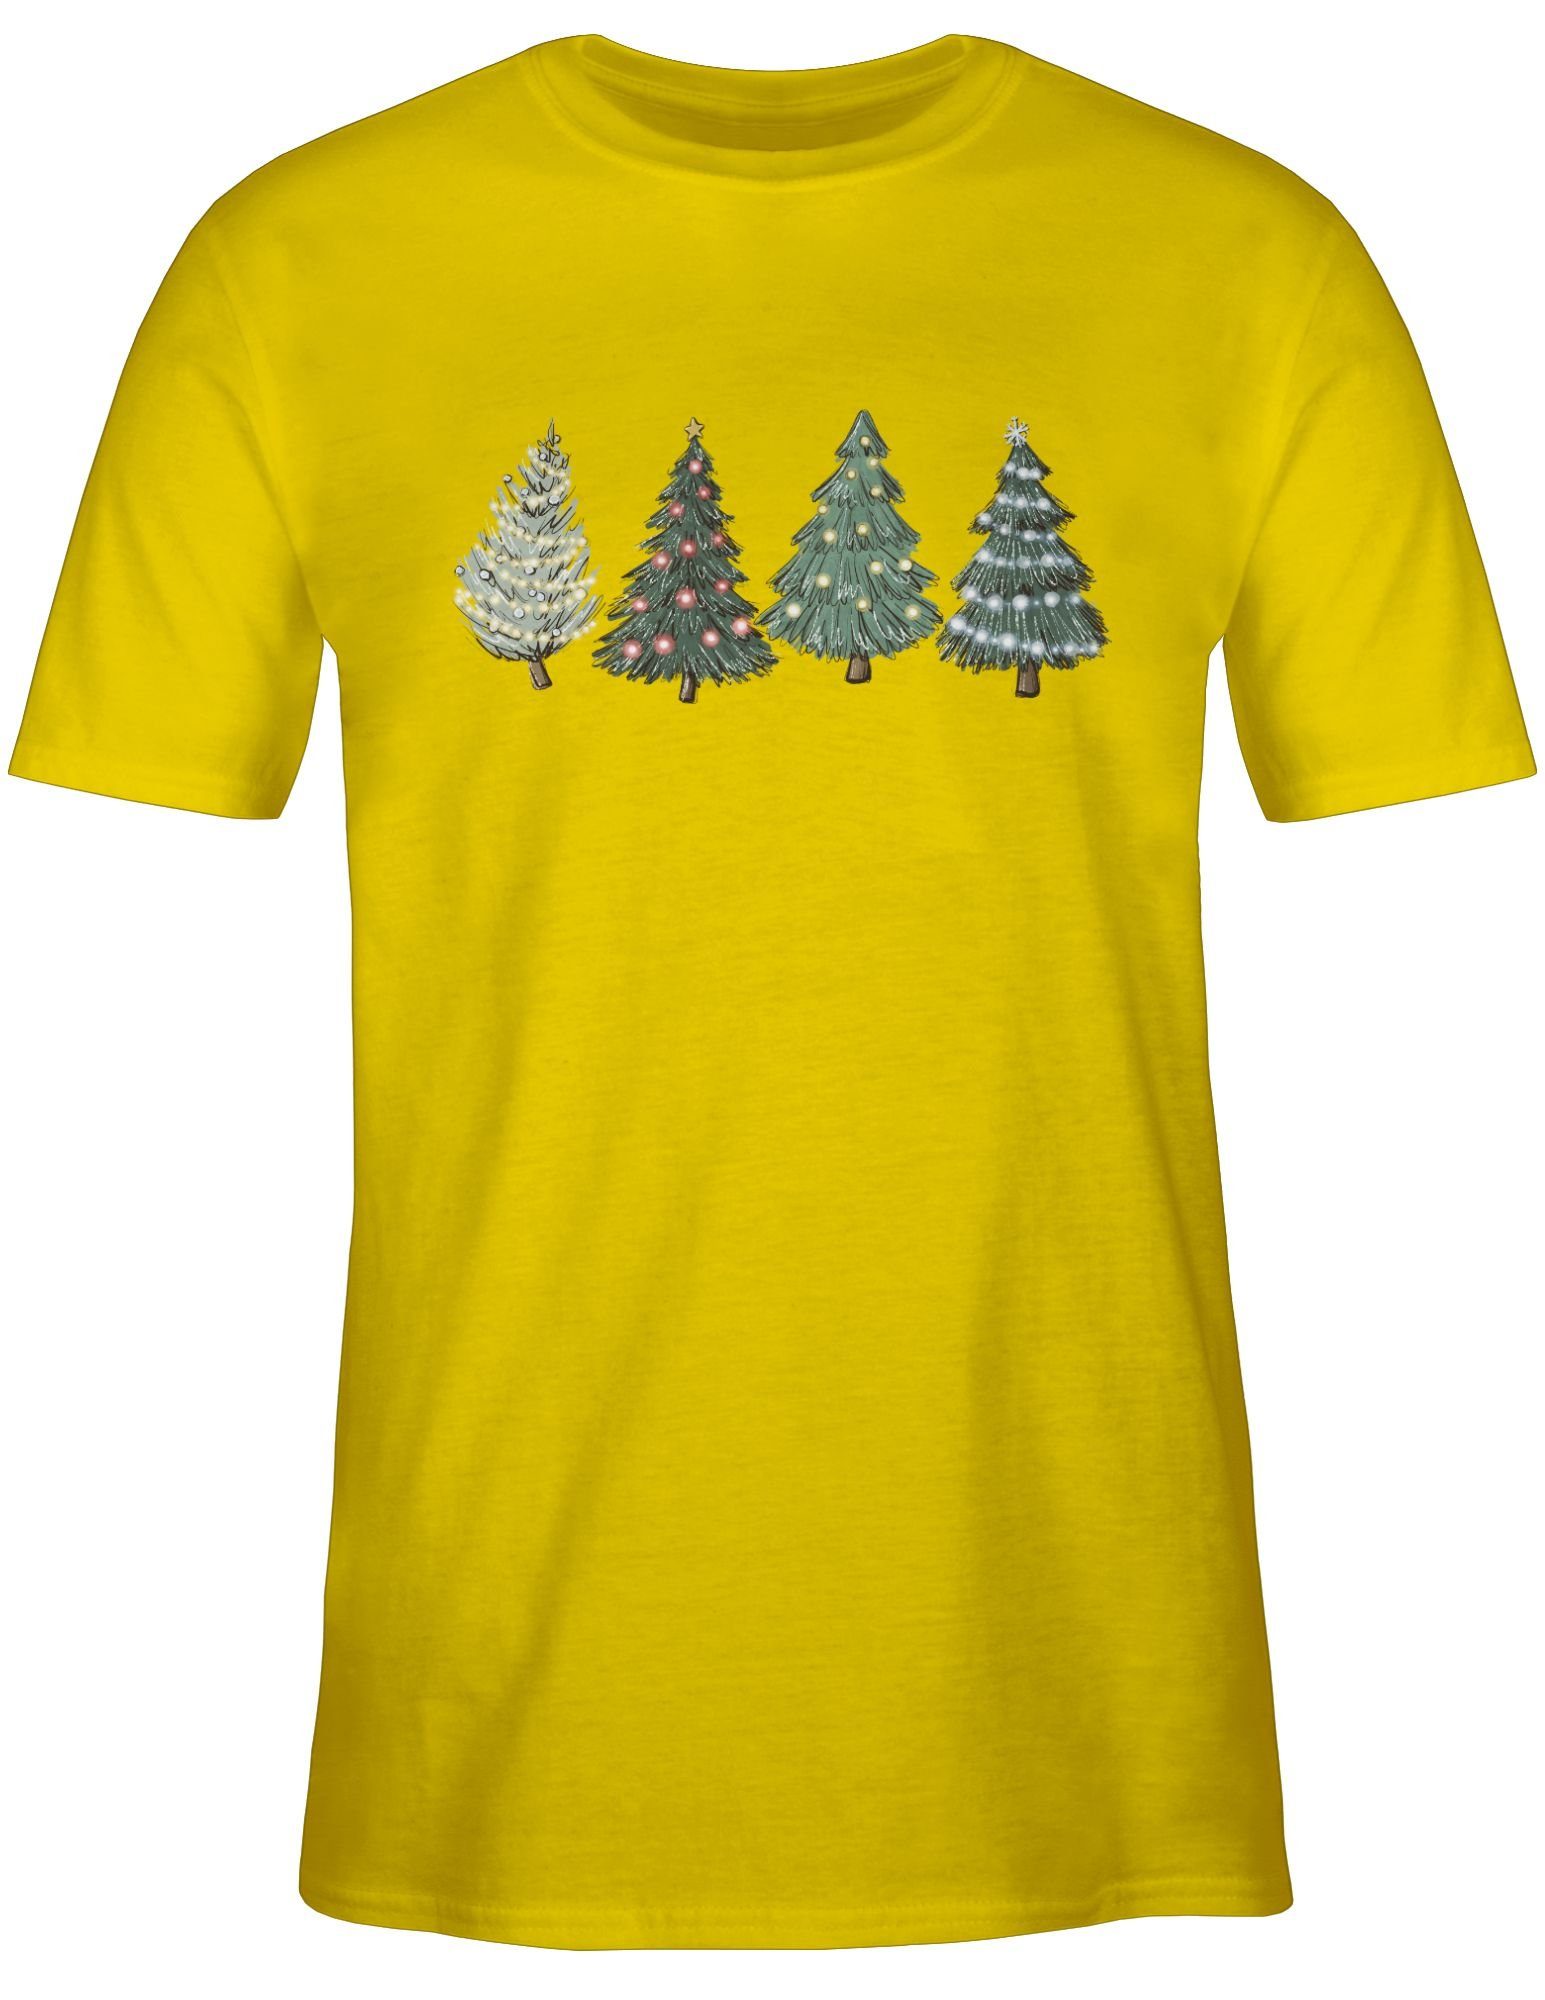 T-Shirt Weihnachtsbäume Kleidung Gelb Shirtracer Weihachten 02